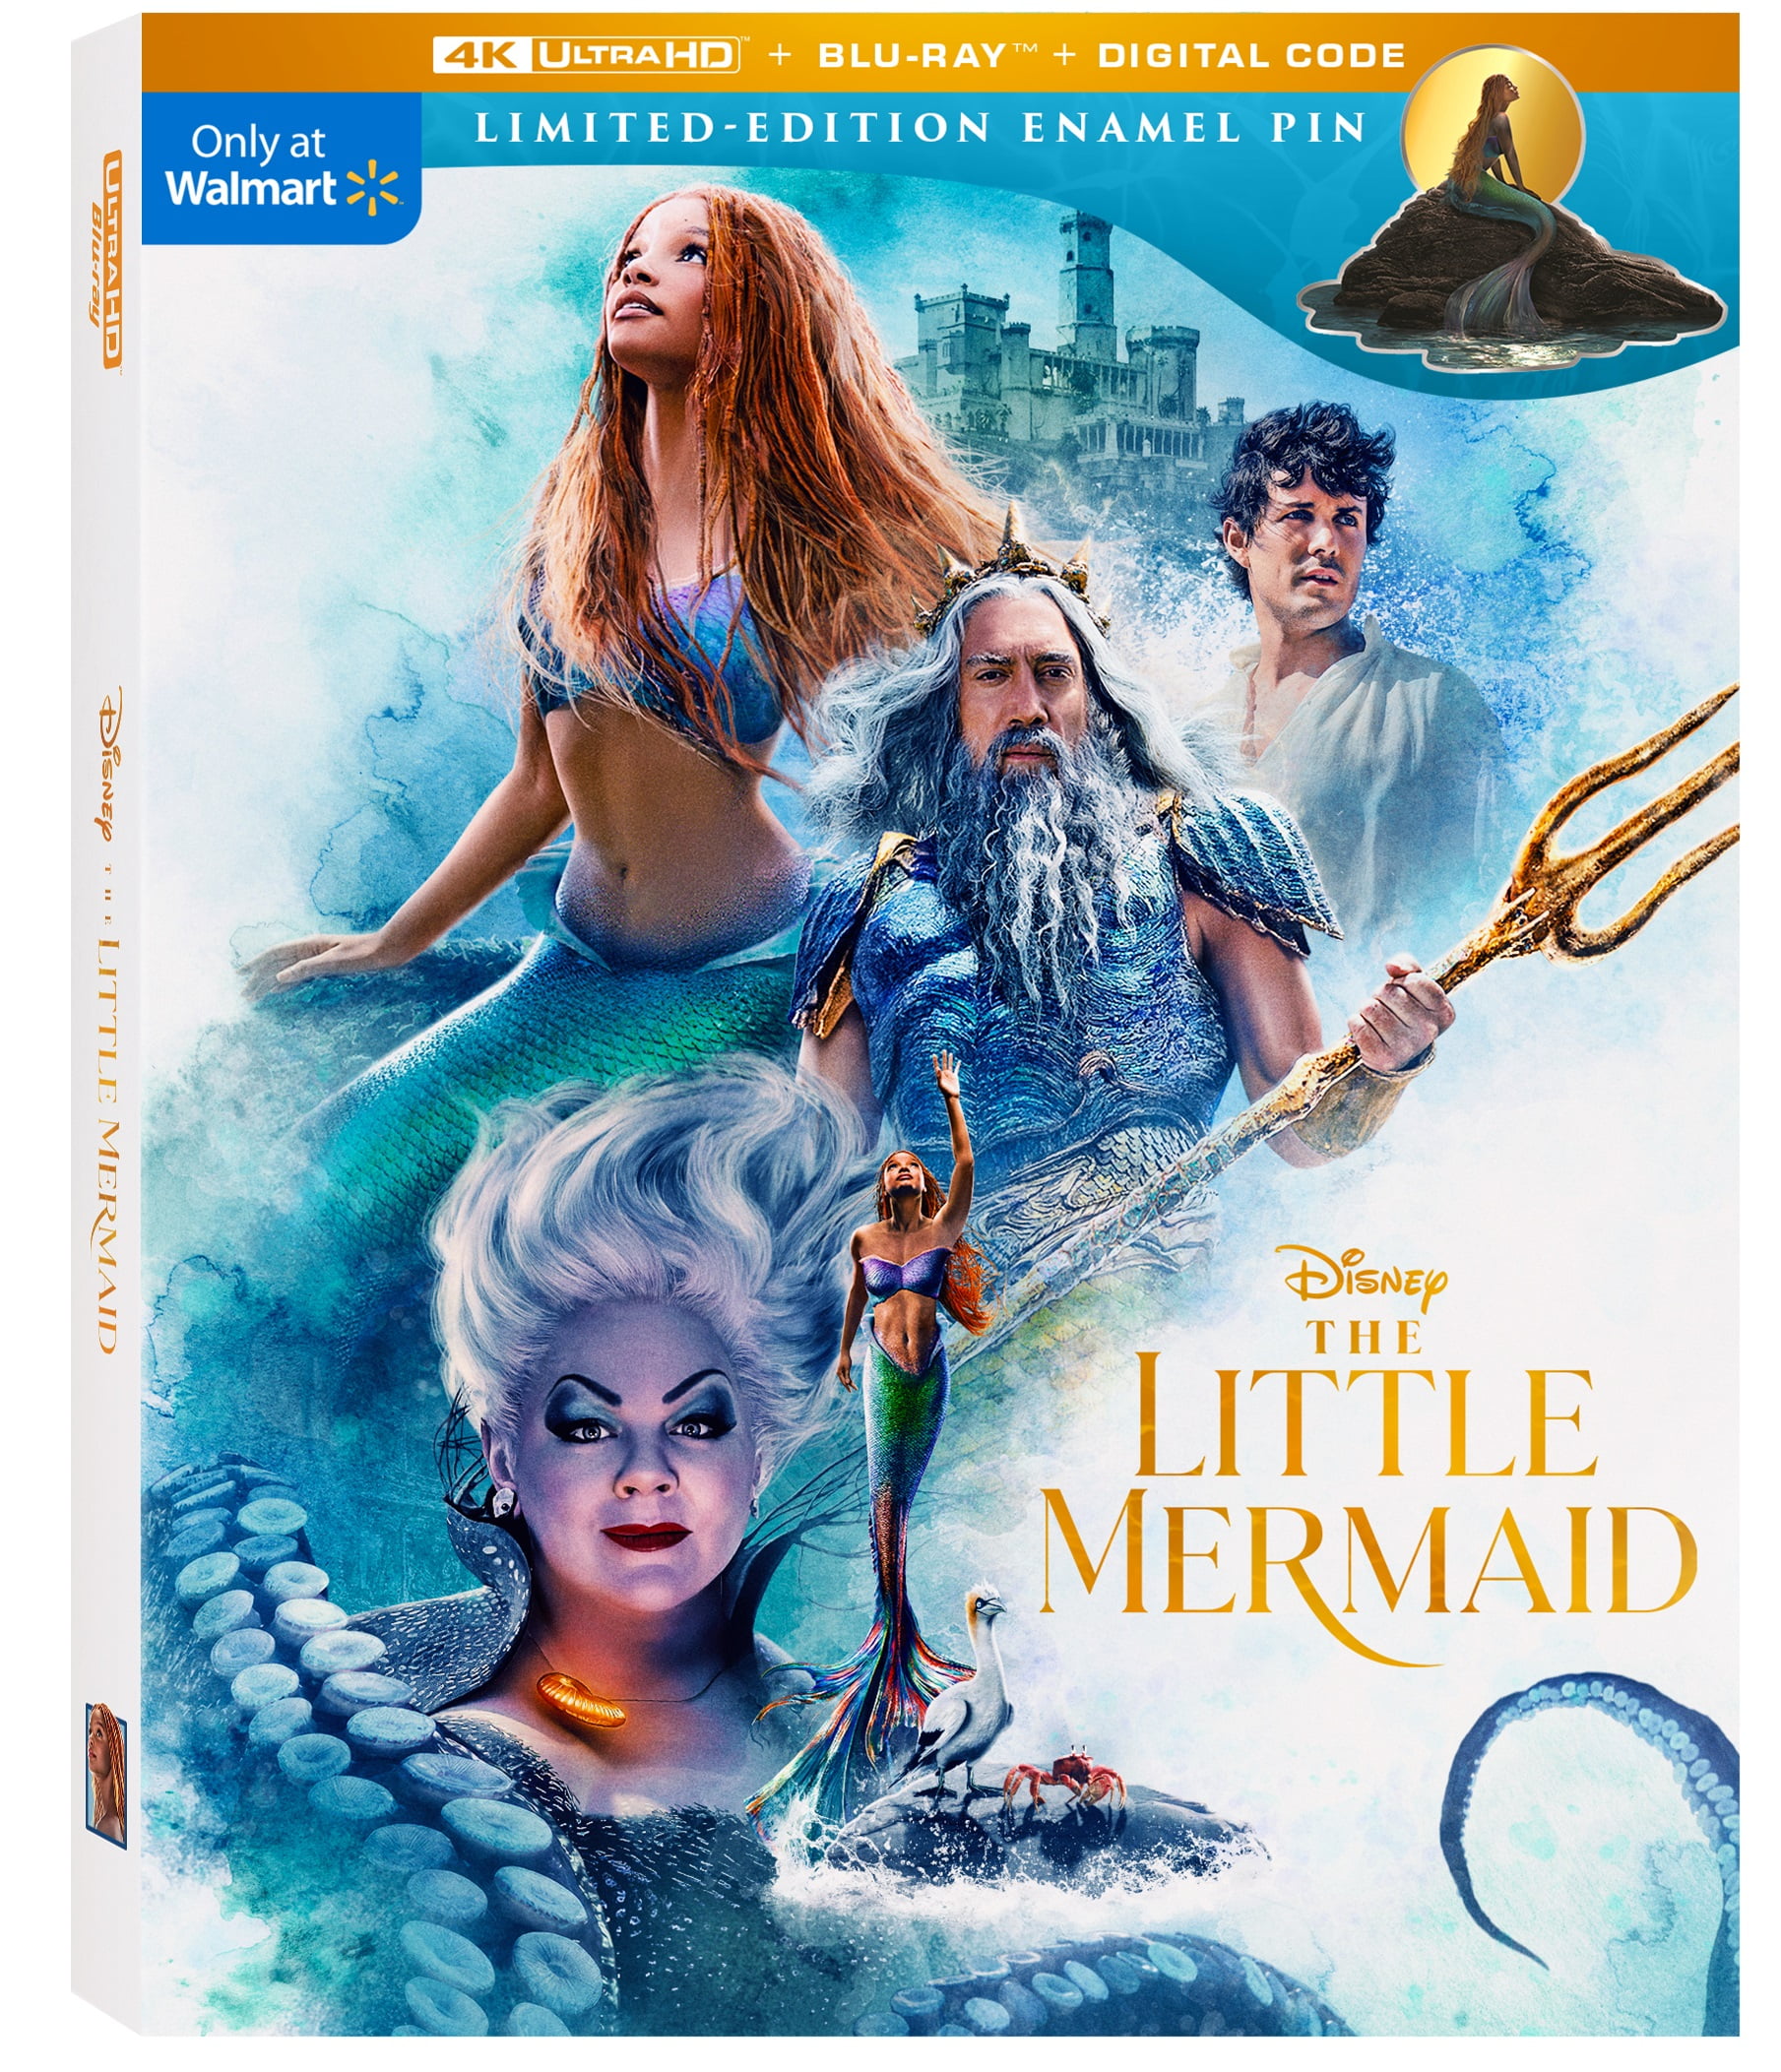 The Mermaid Movie Download oow ycadhm